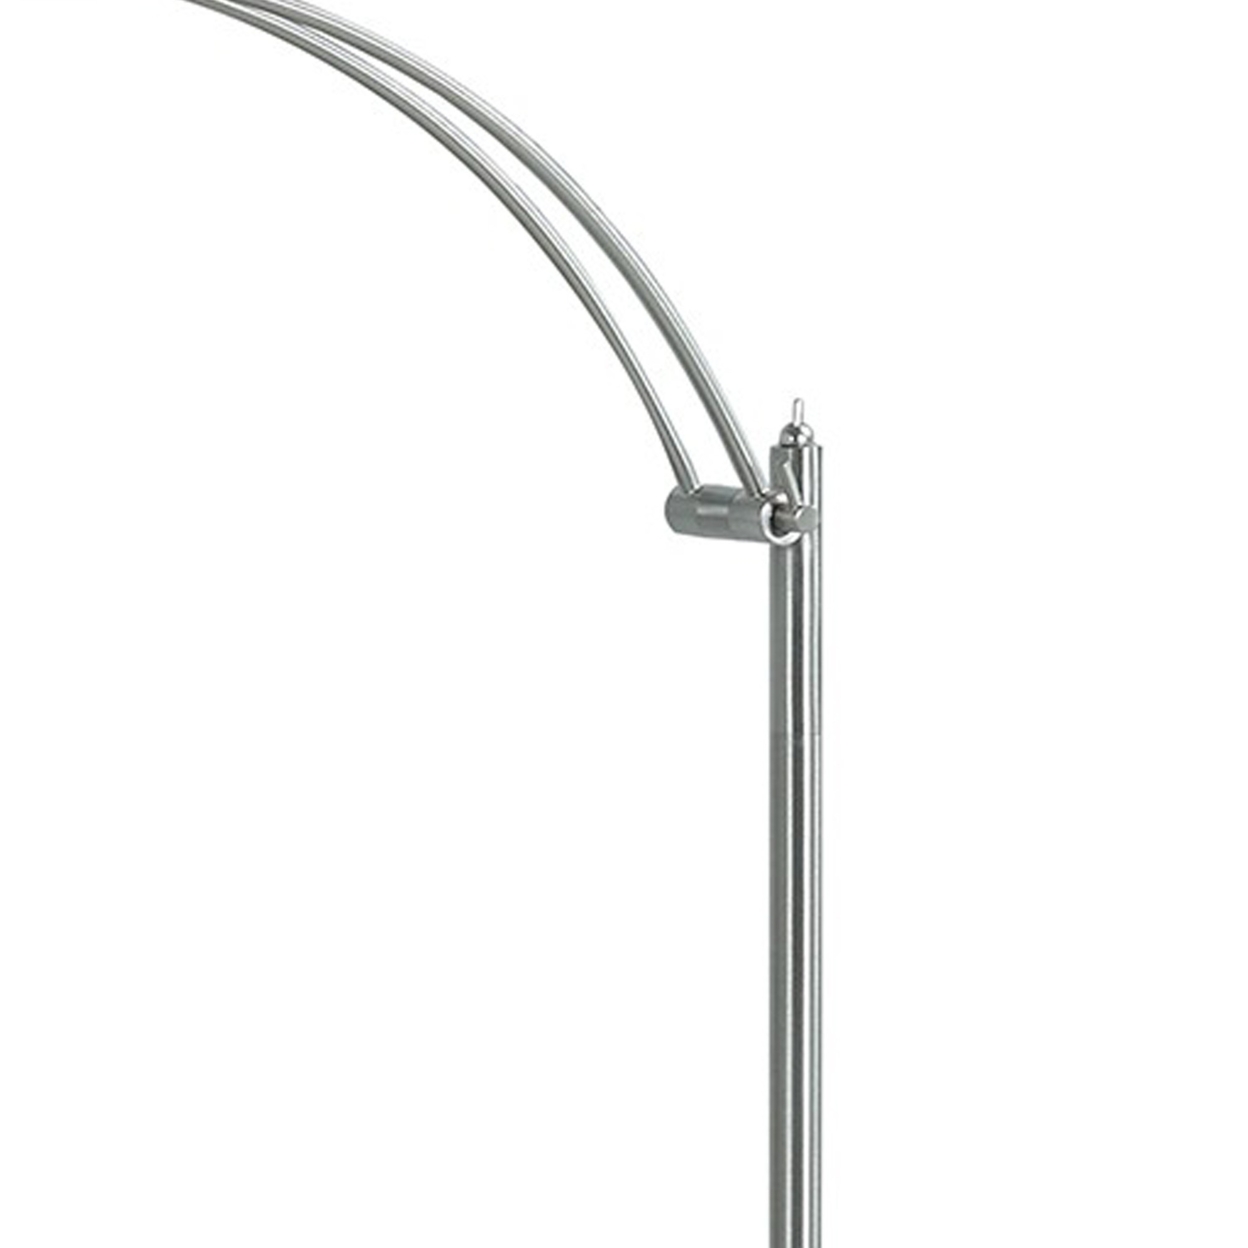 Floor Lamp With Metal Tube Design Body And Adjustable Head, Silver- Saltoro Sherpi